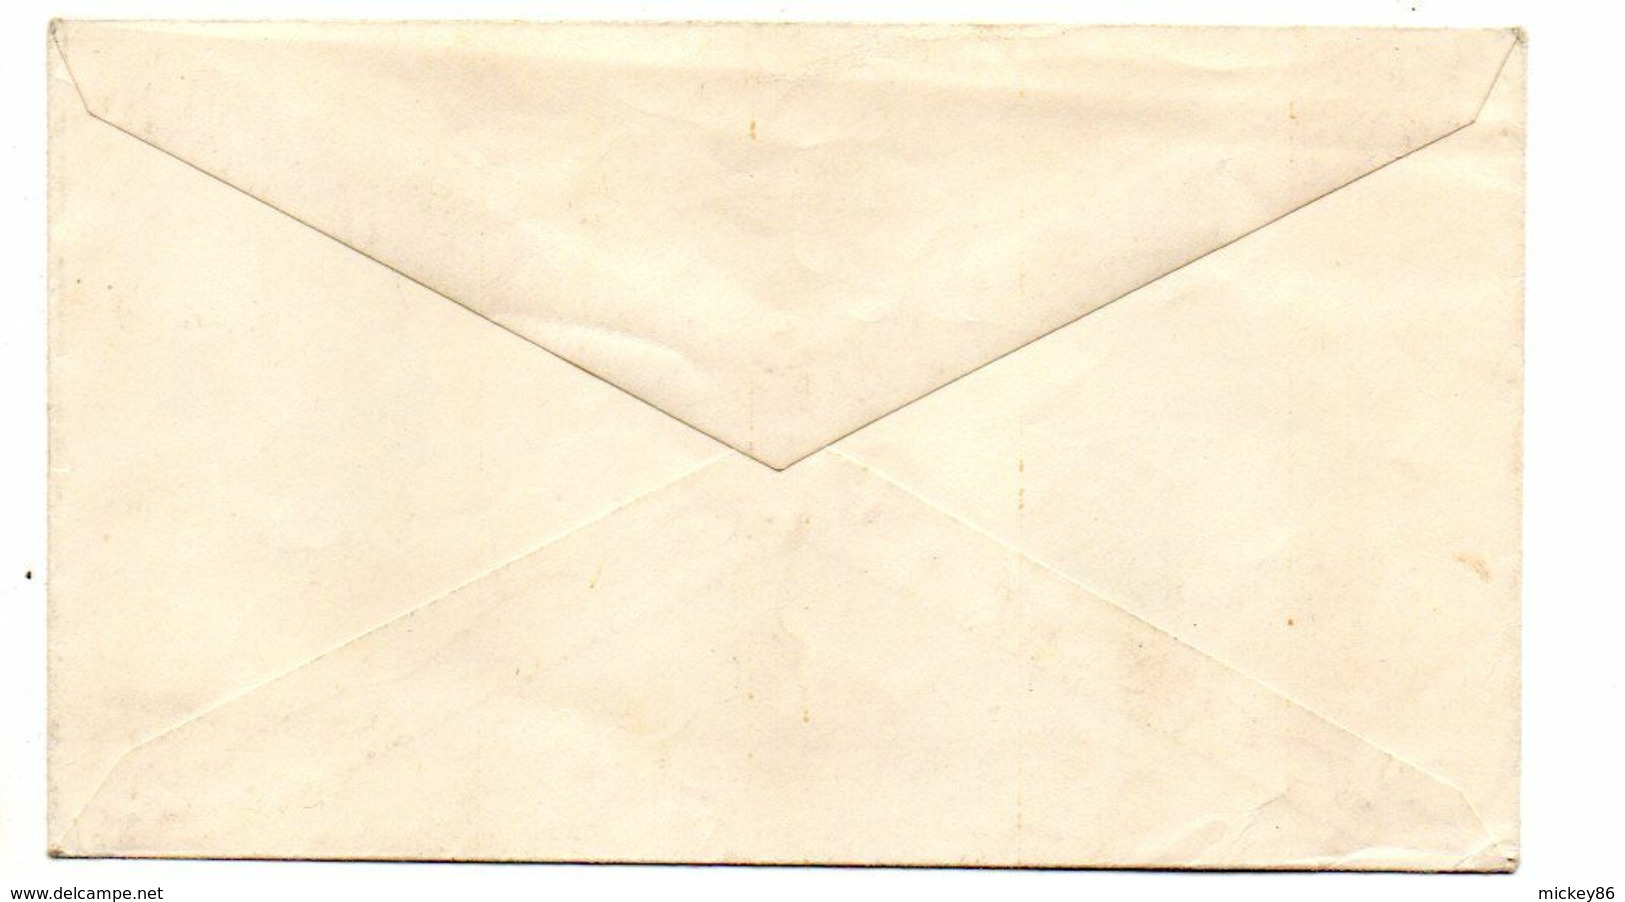 1964--INNSBRUCK-- J.O  Hiver---Lot De 2 Enveloppes Souvenirs - Inverno1964: Innsbruck